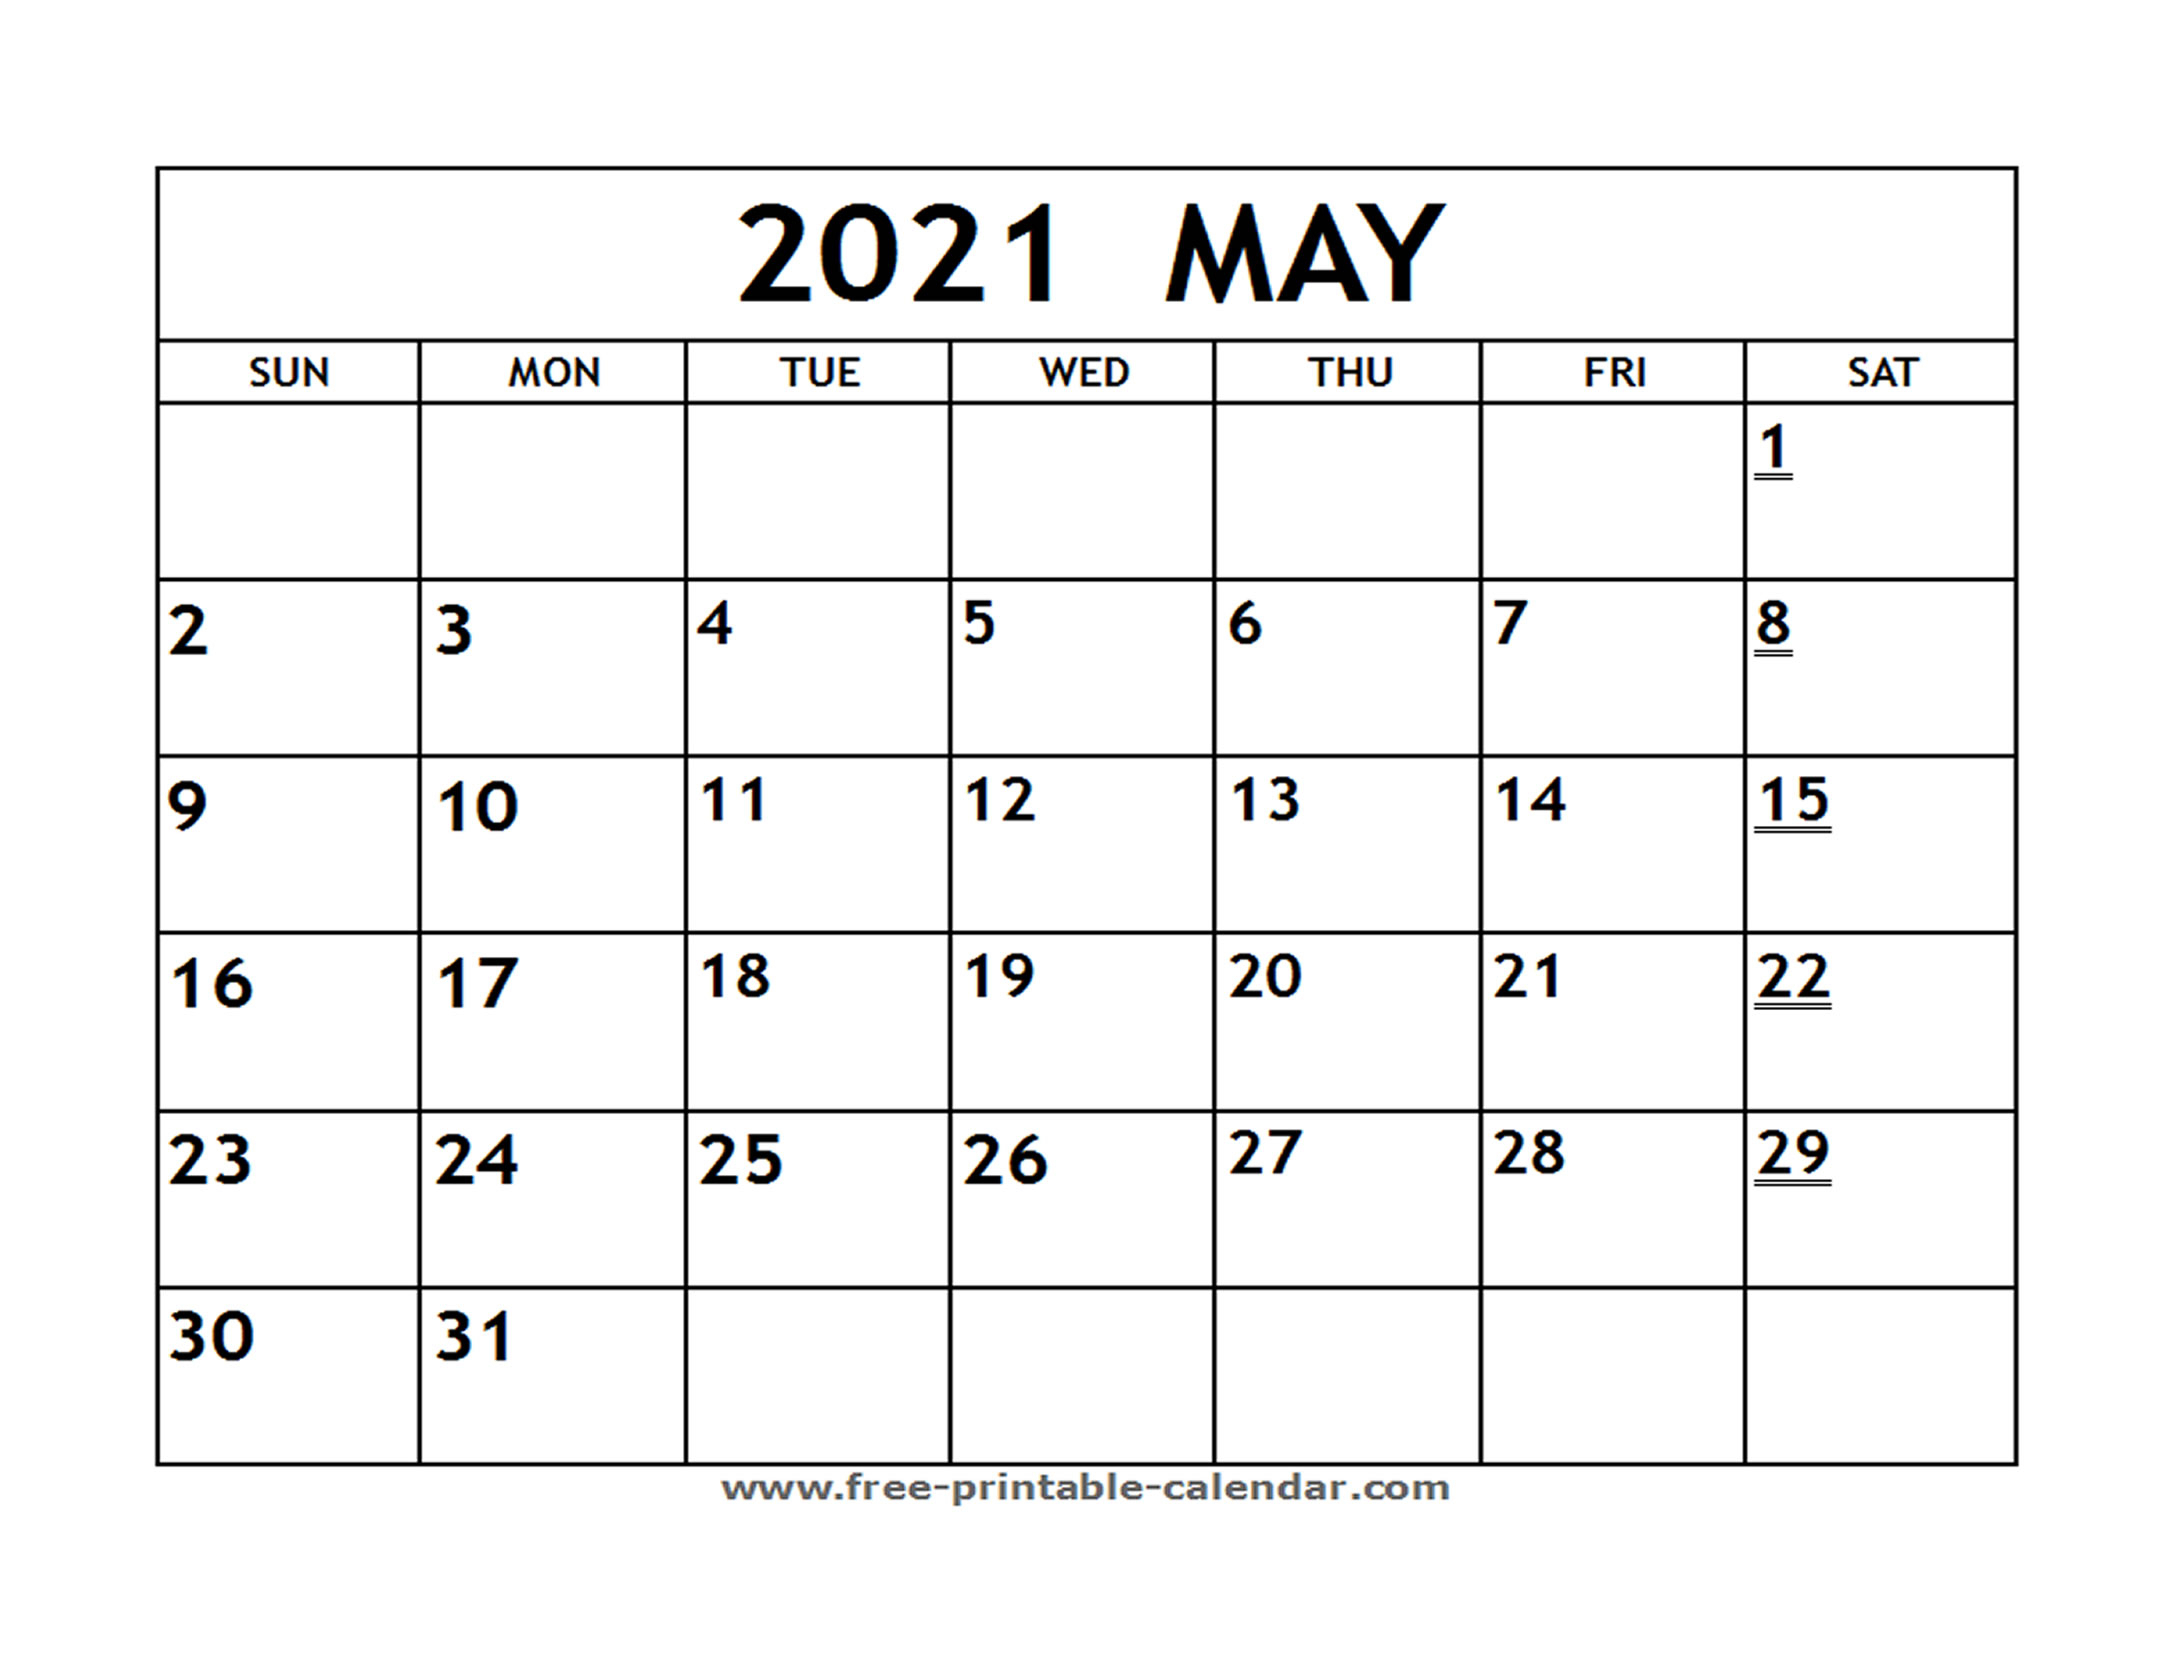 Printable 2021 May Calendar - Free-Printable-Calendar